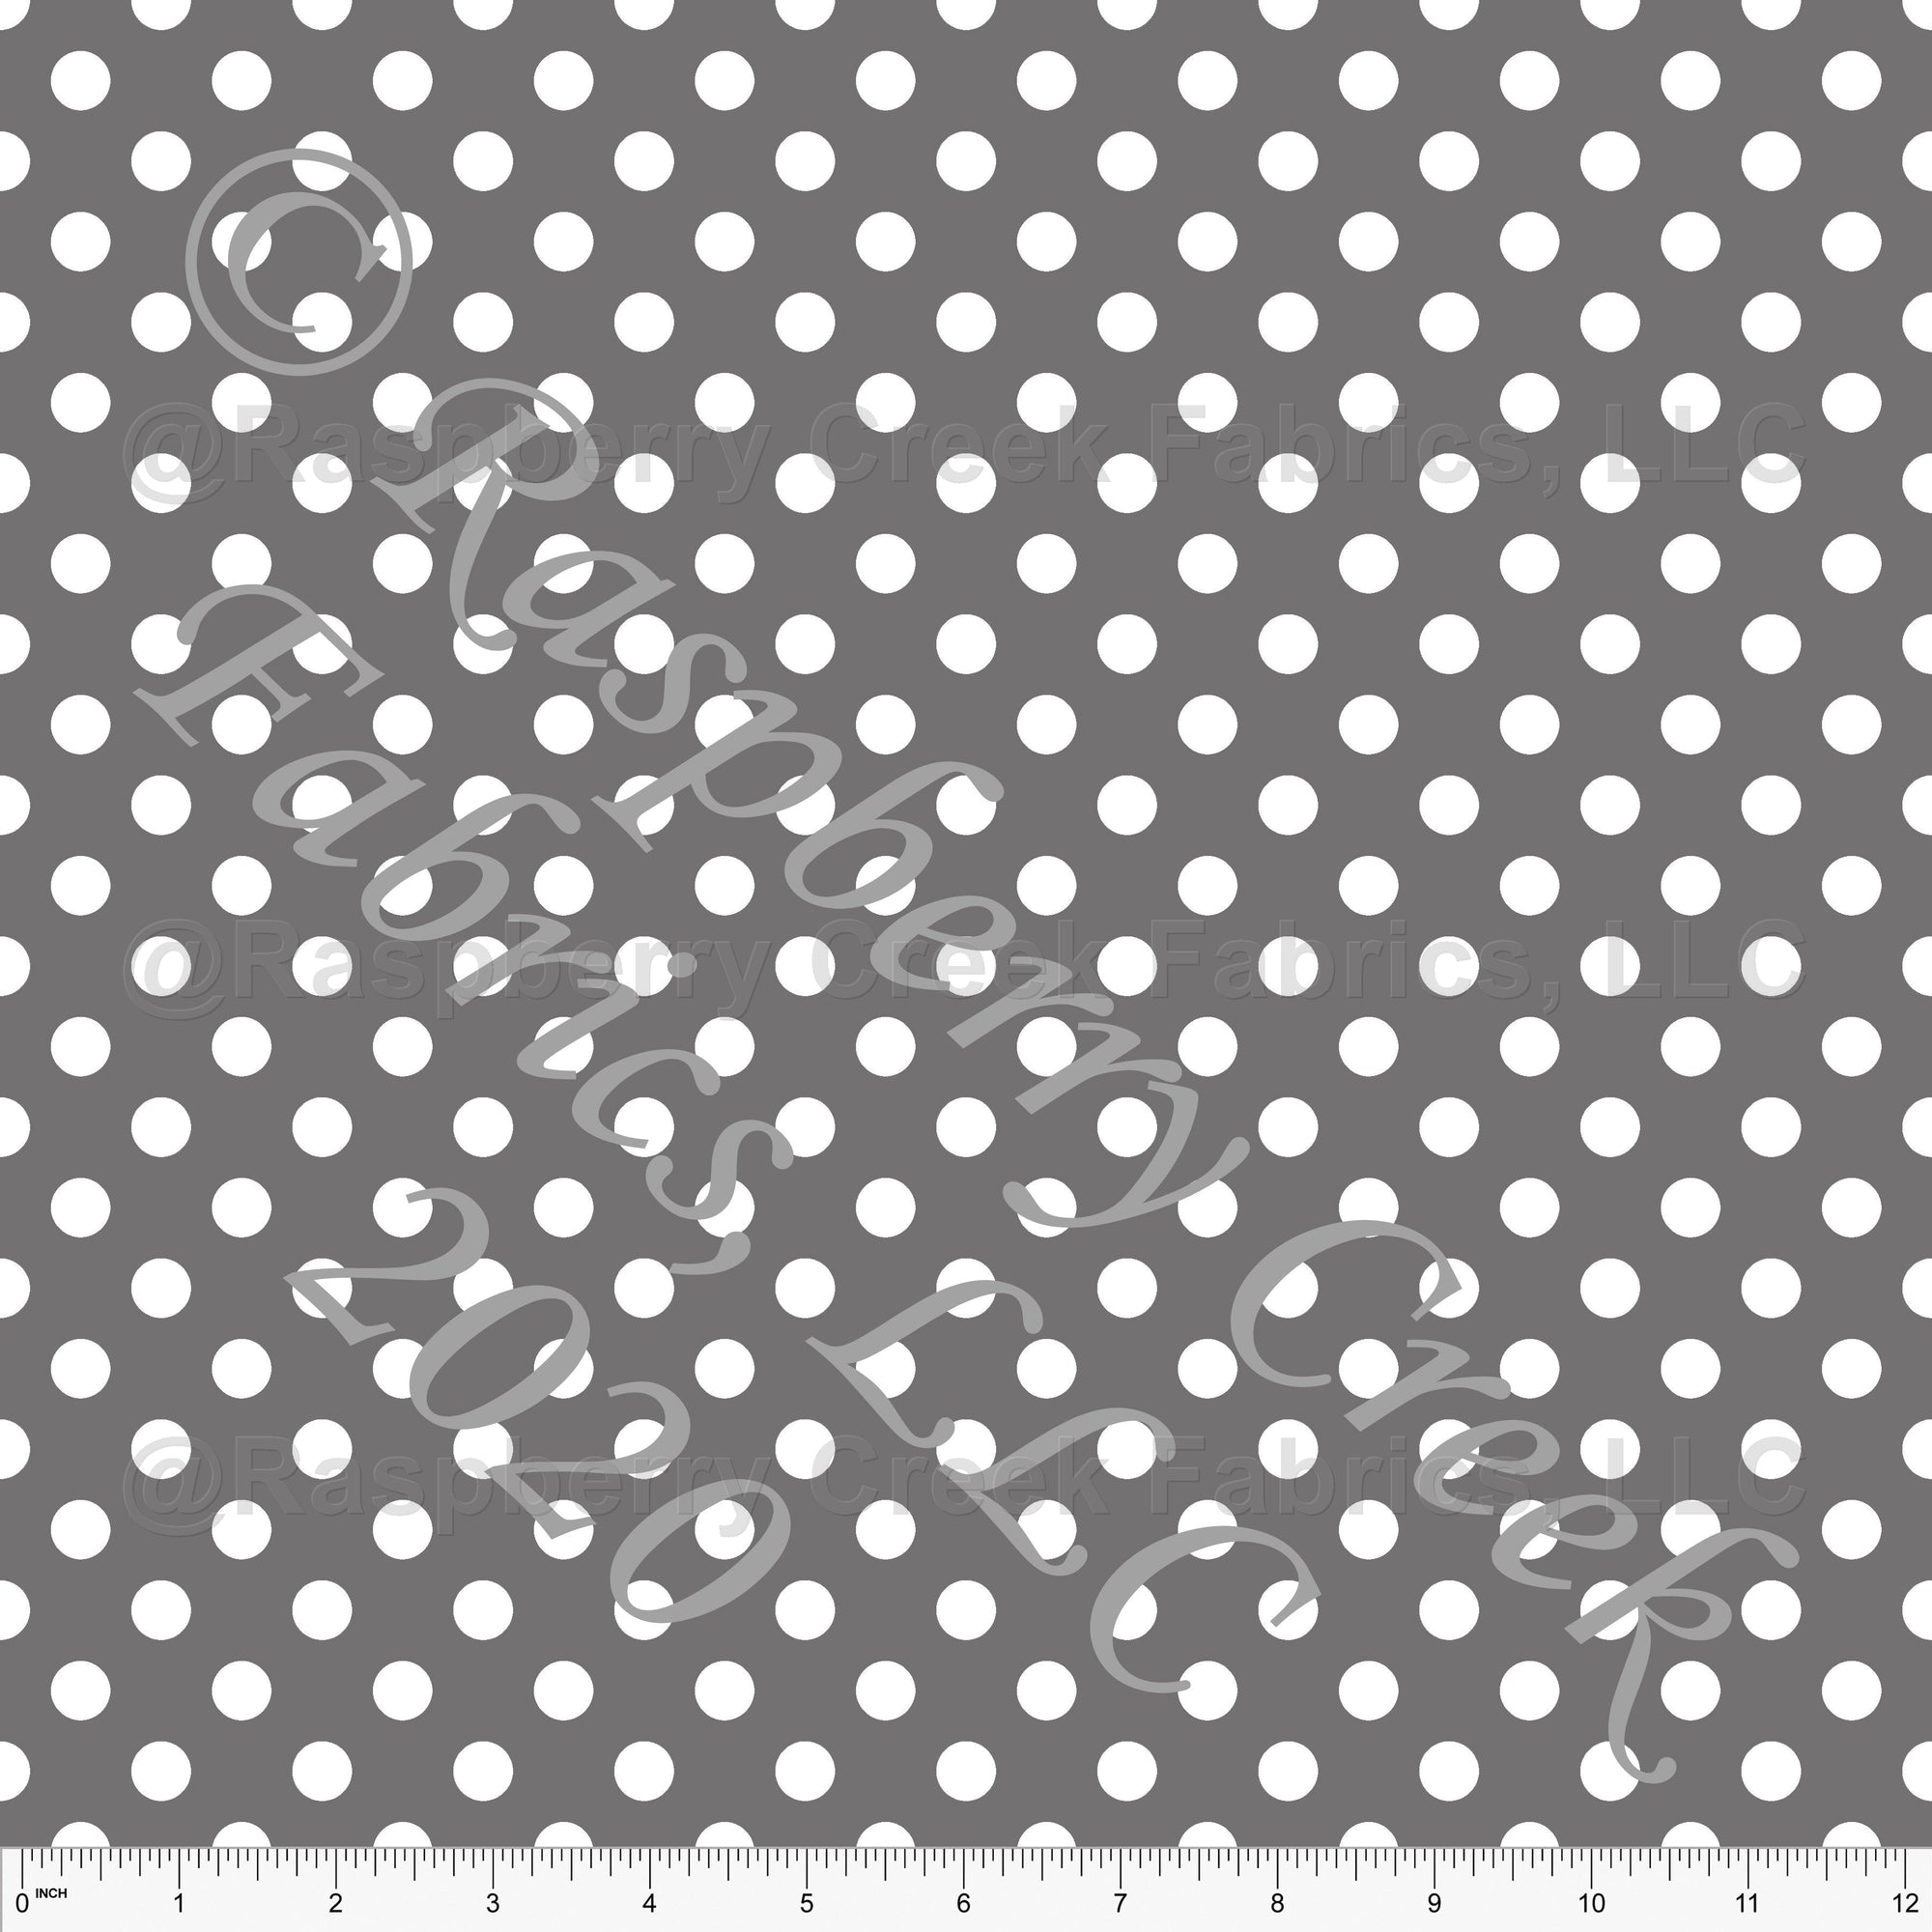 Grey and White Polka Dot Print Fabric, Club Fabrics Fabric, Raspberry Creek Fabrics, watermarked